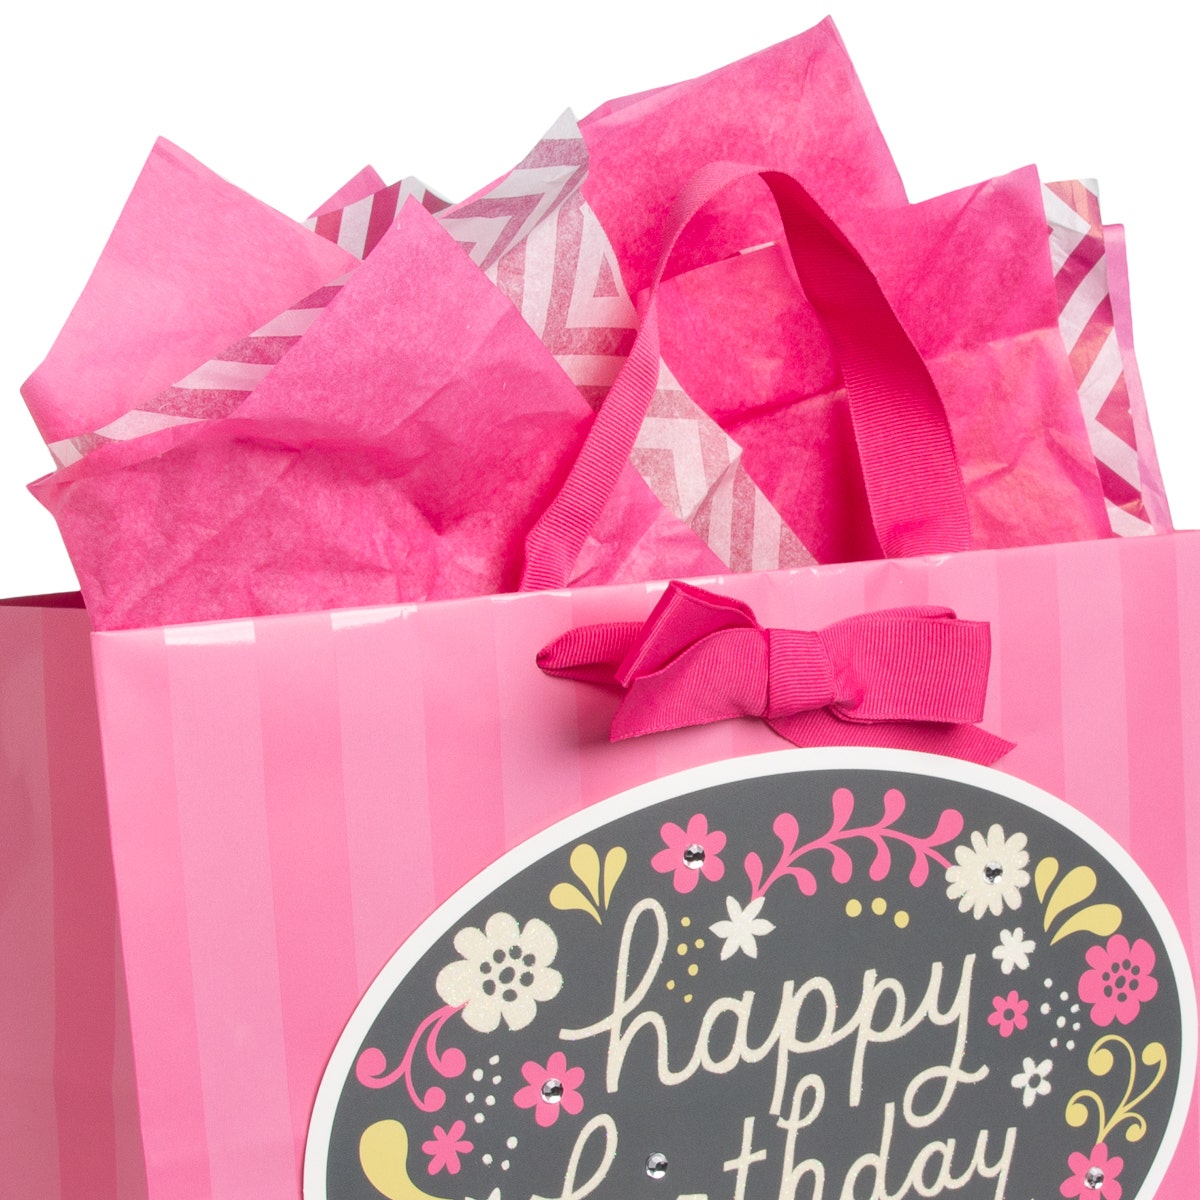 6pk Hallmark Large Gift Wrap Tissue – Birthdays, Holidays & More